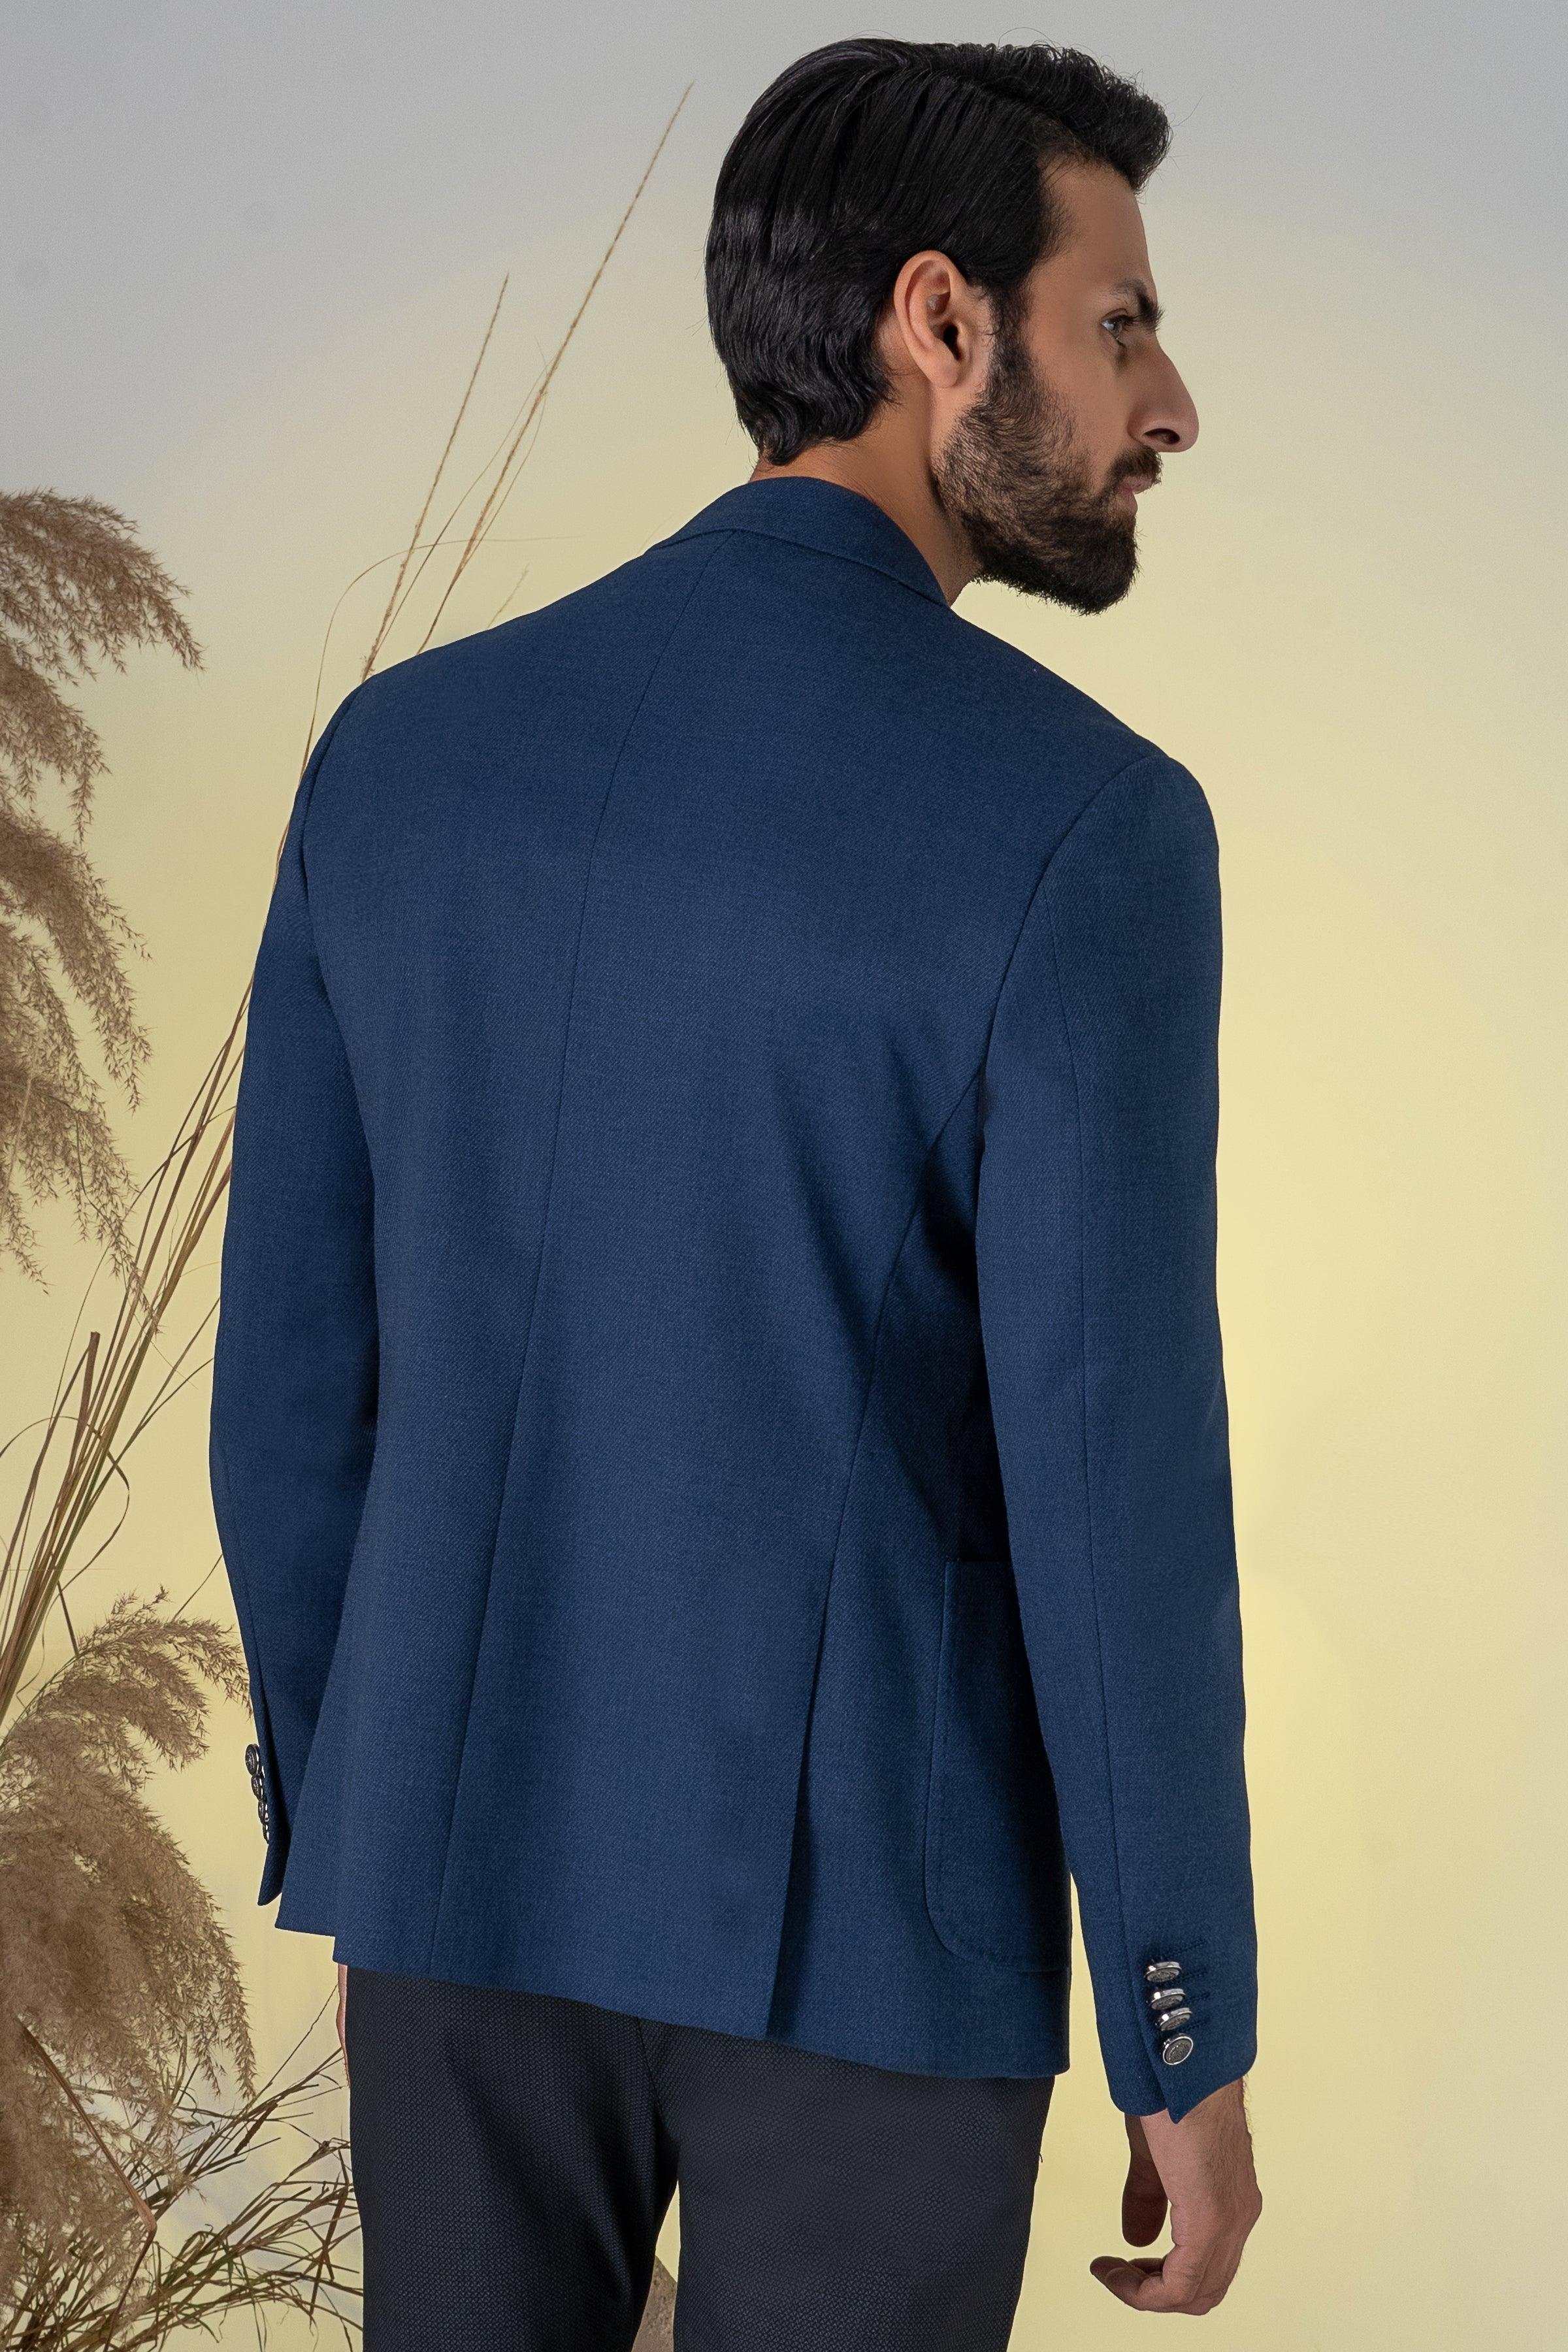 SIGNATURE CASUAL COAT NAVY BLUE at Charcoal Clothing